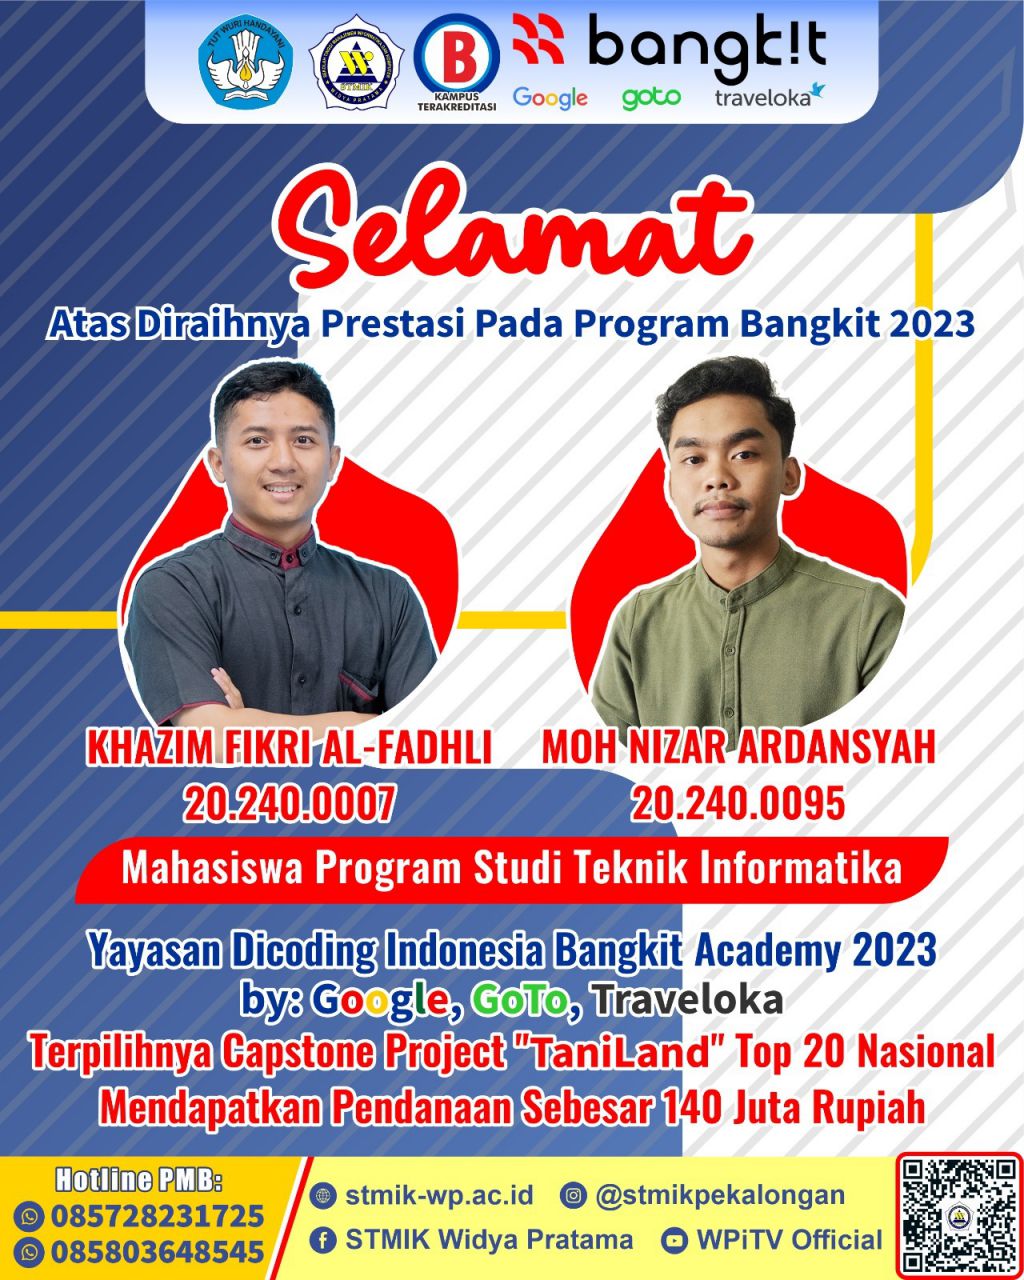 bangkit-academy-2023